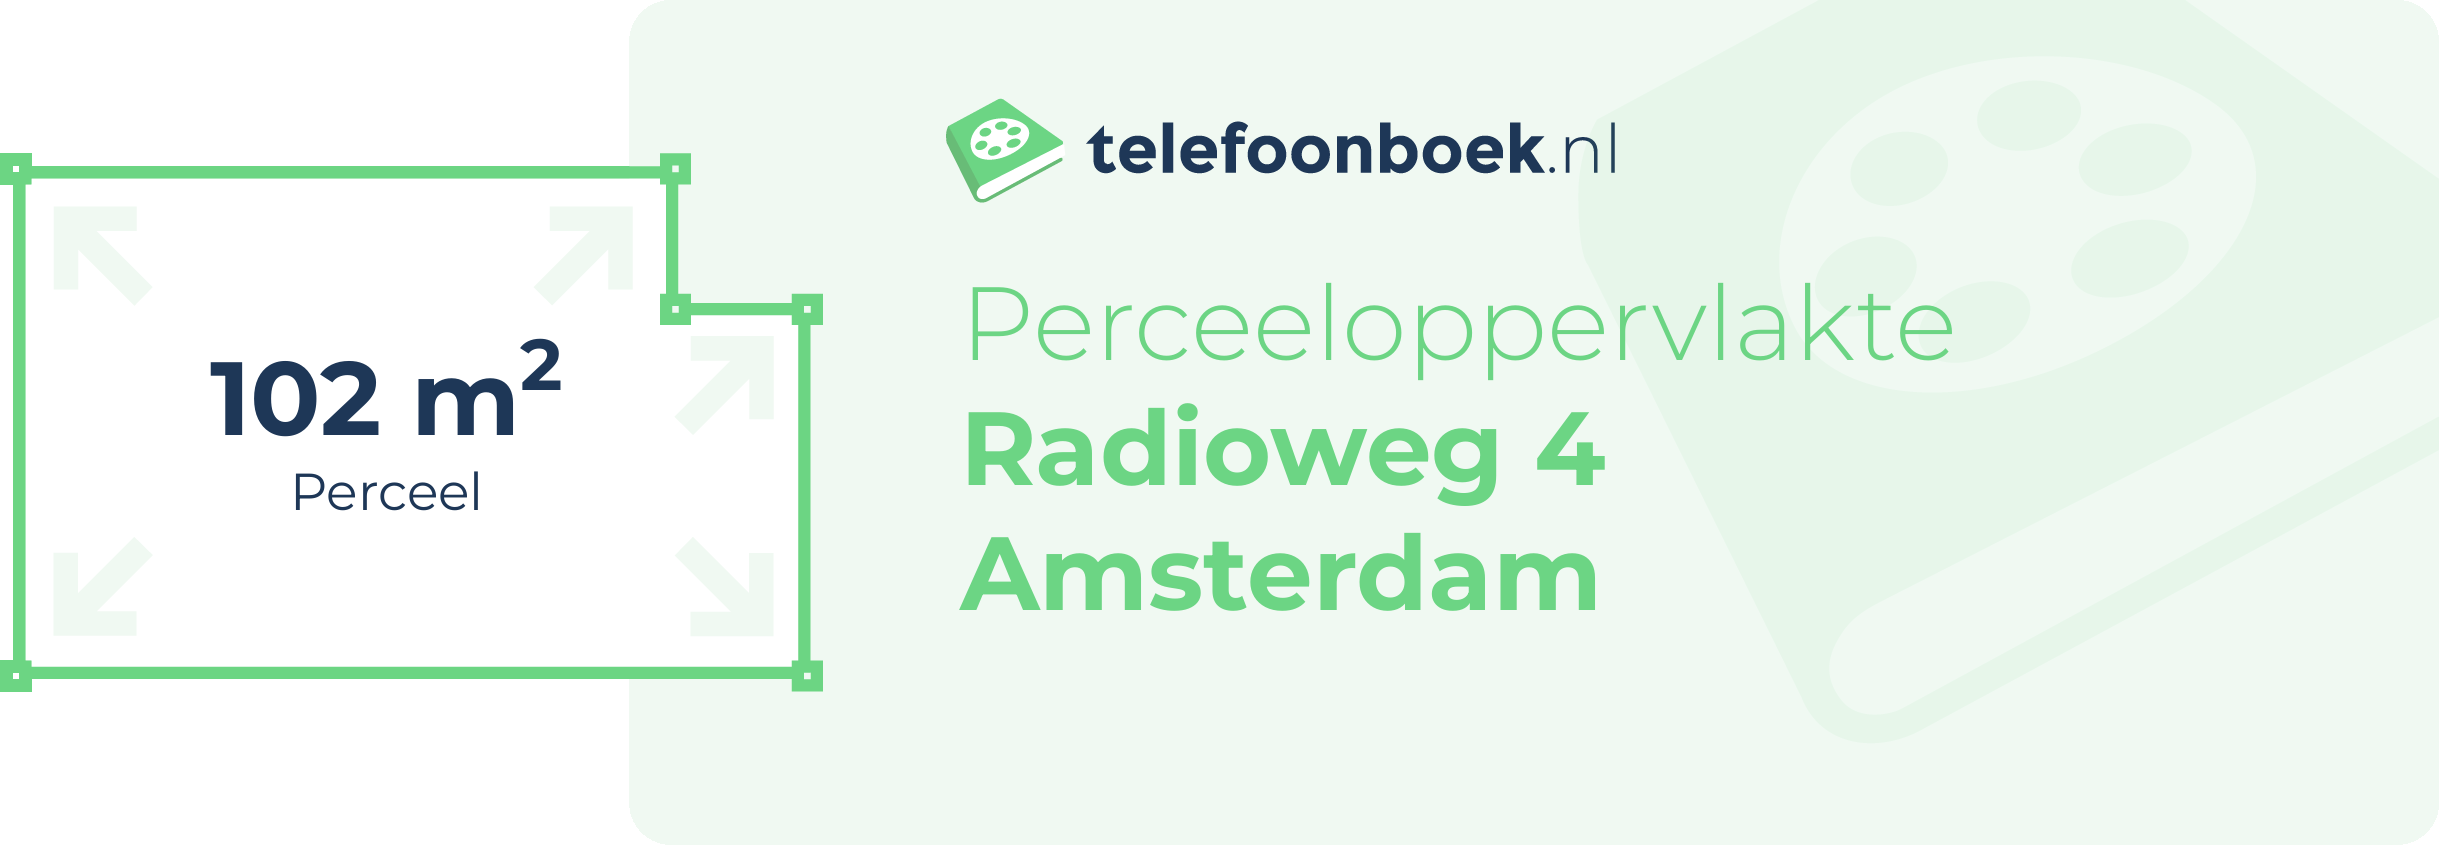 Perceeloppervlakte Radioweg 4 Amsterdam